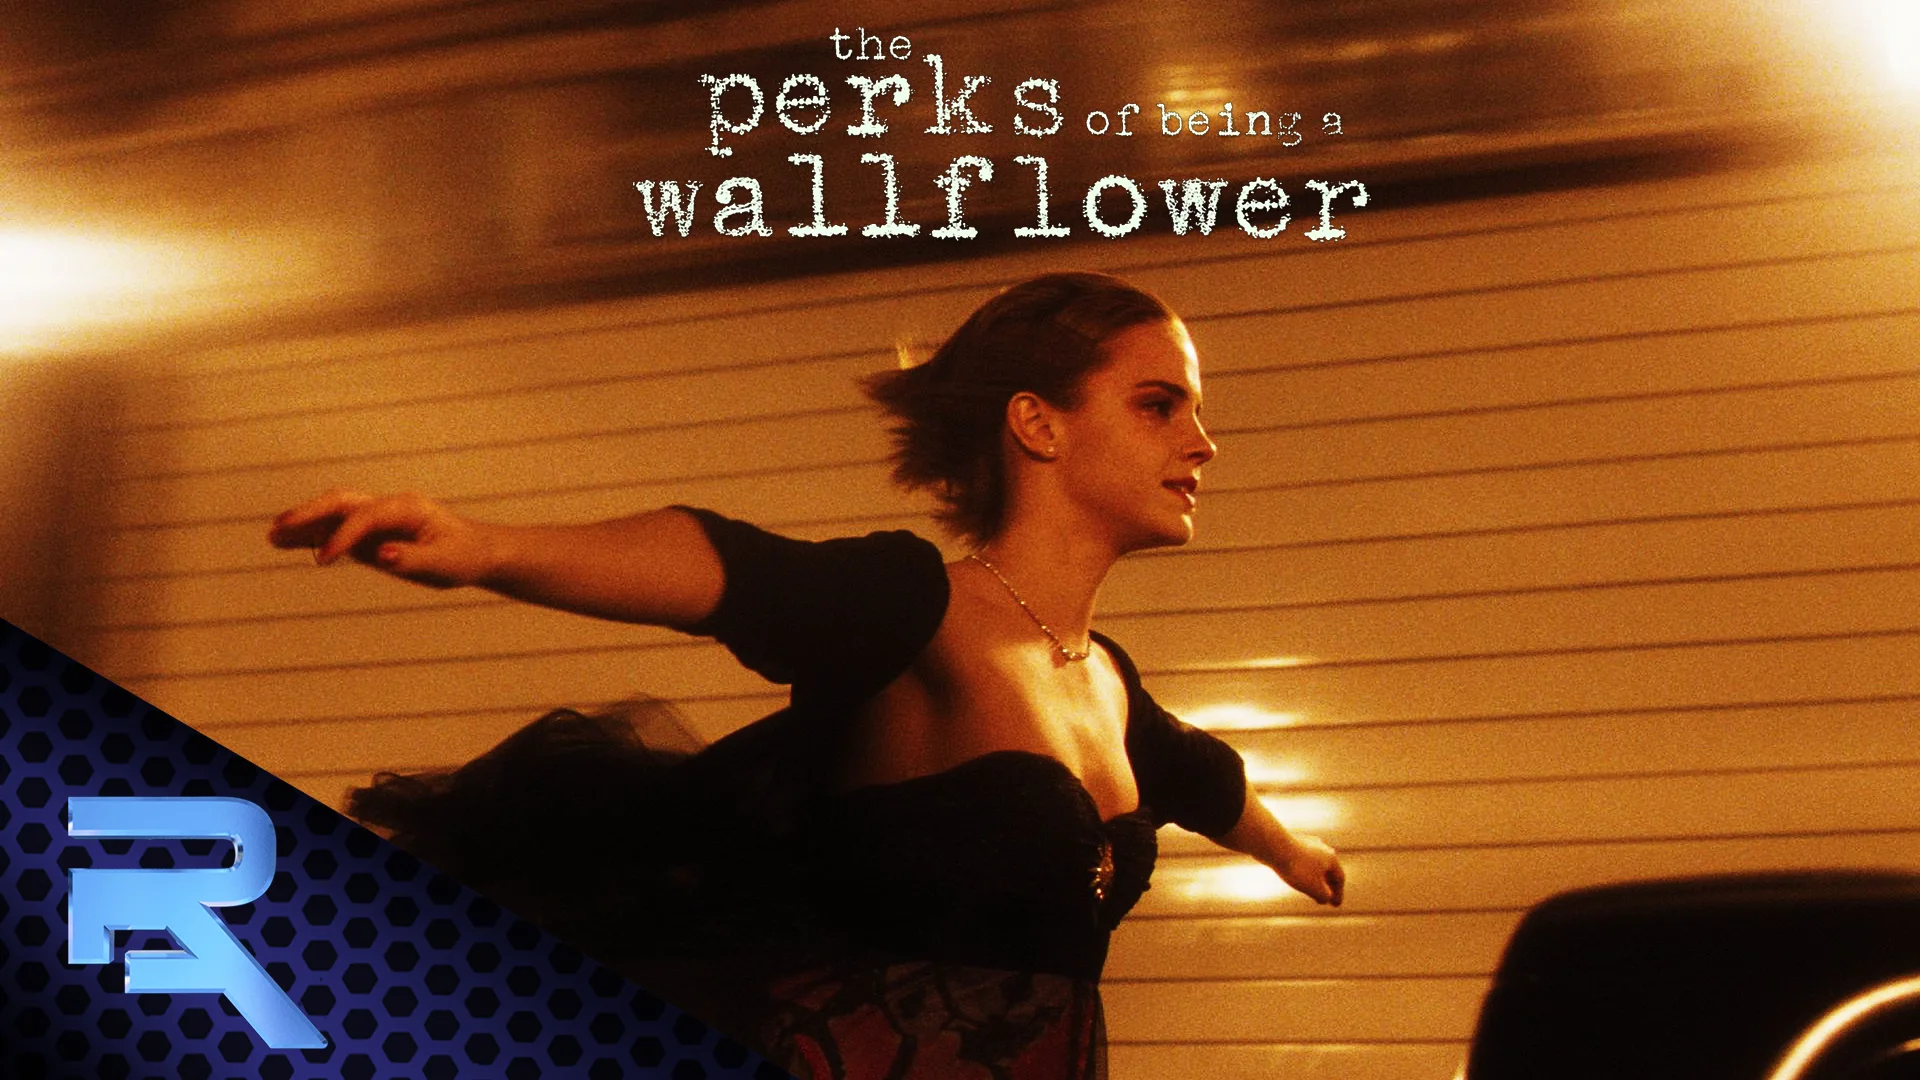 perks of being a wallflower wallpaper tumblr